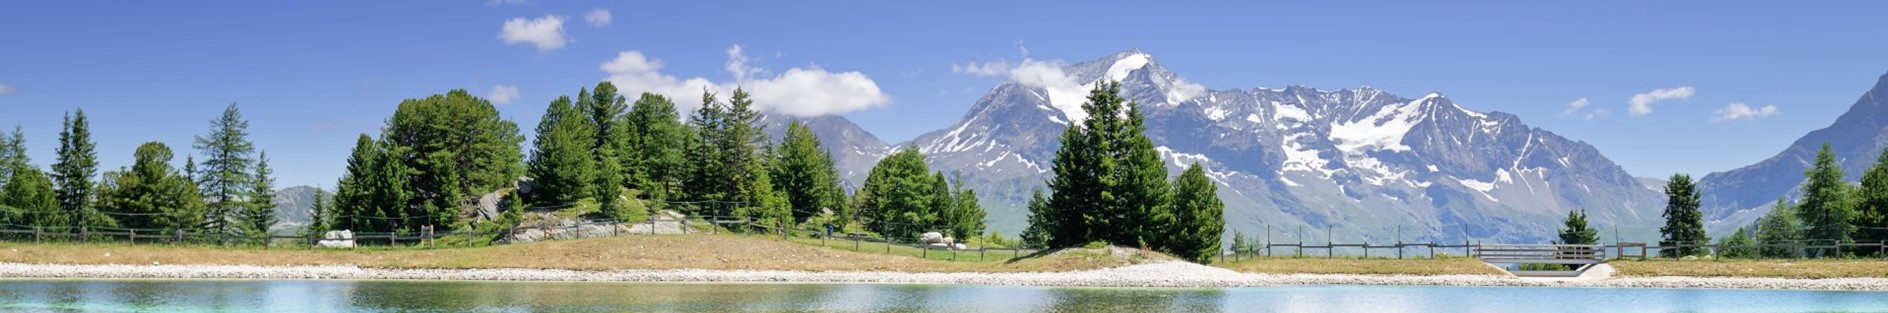 mountain-view-french-alpes-oxygene-ski-collection